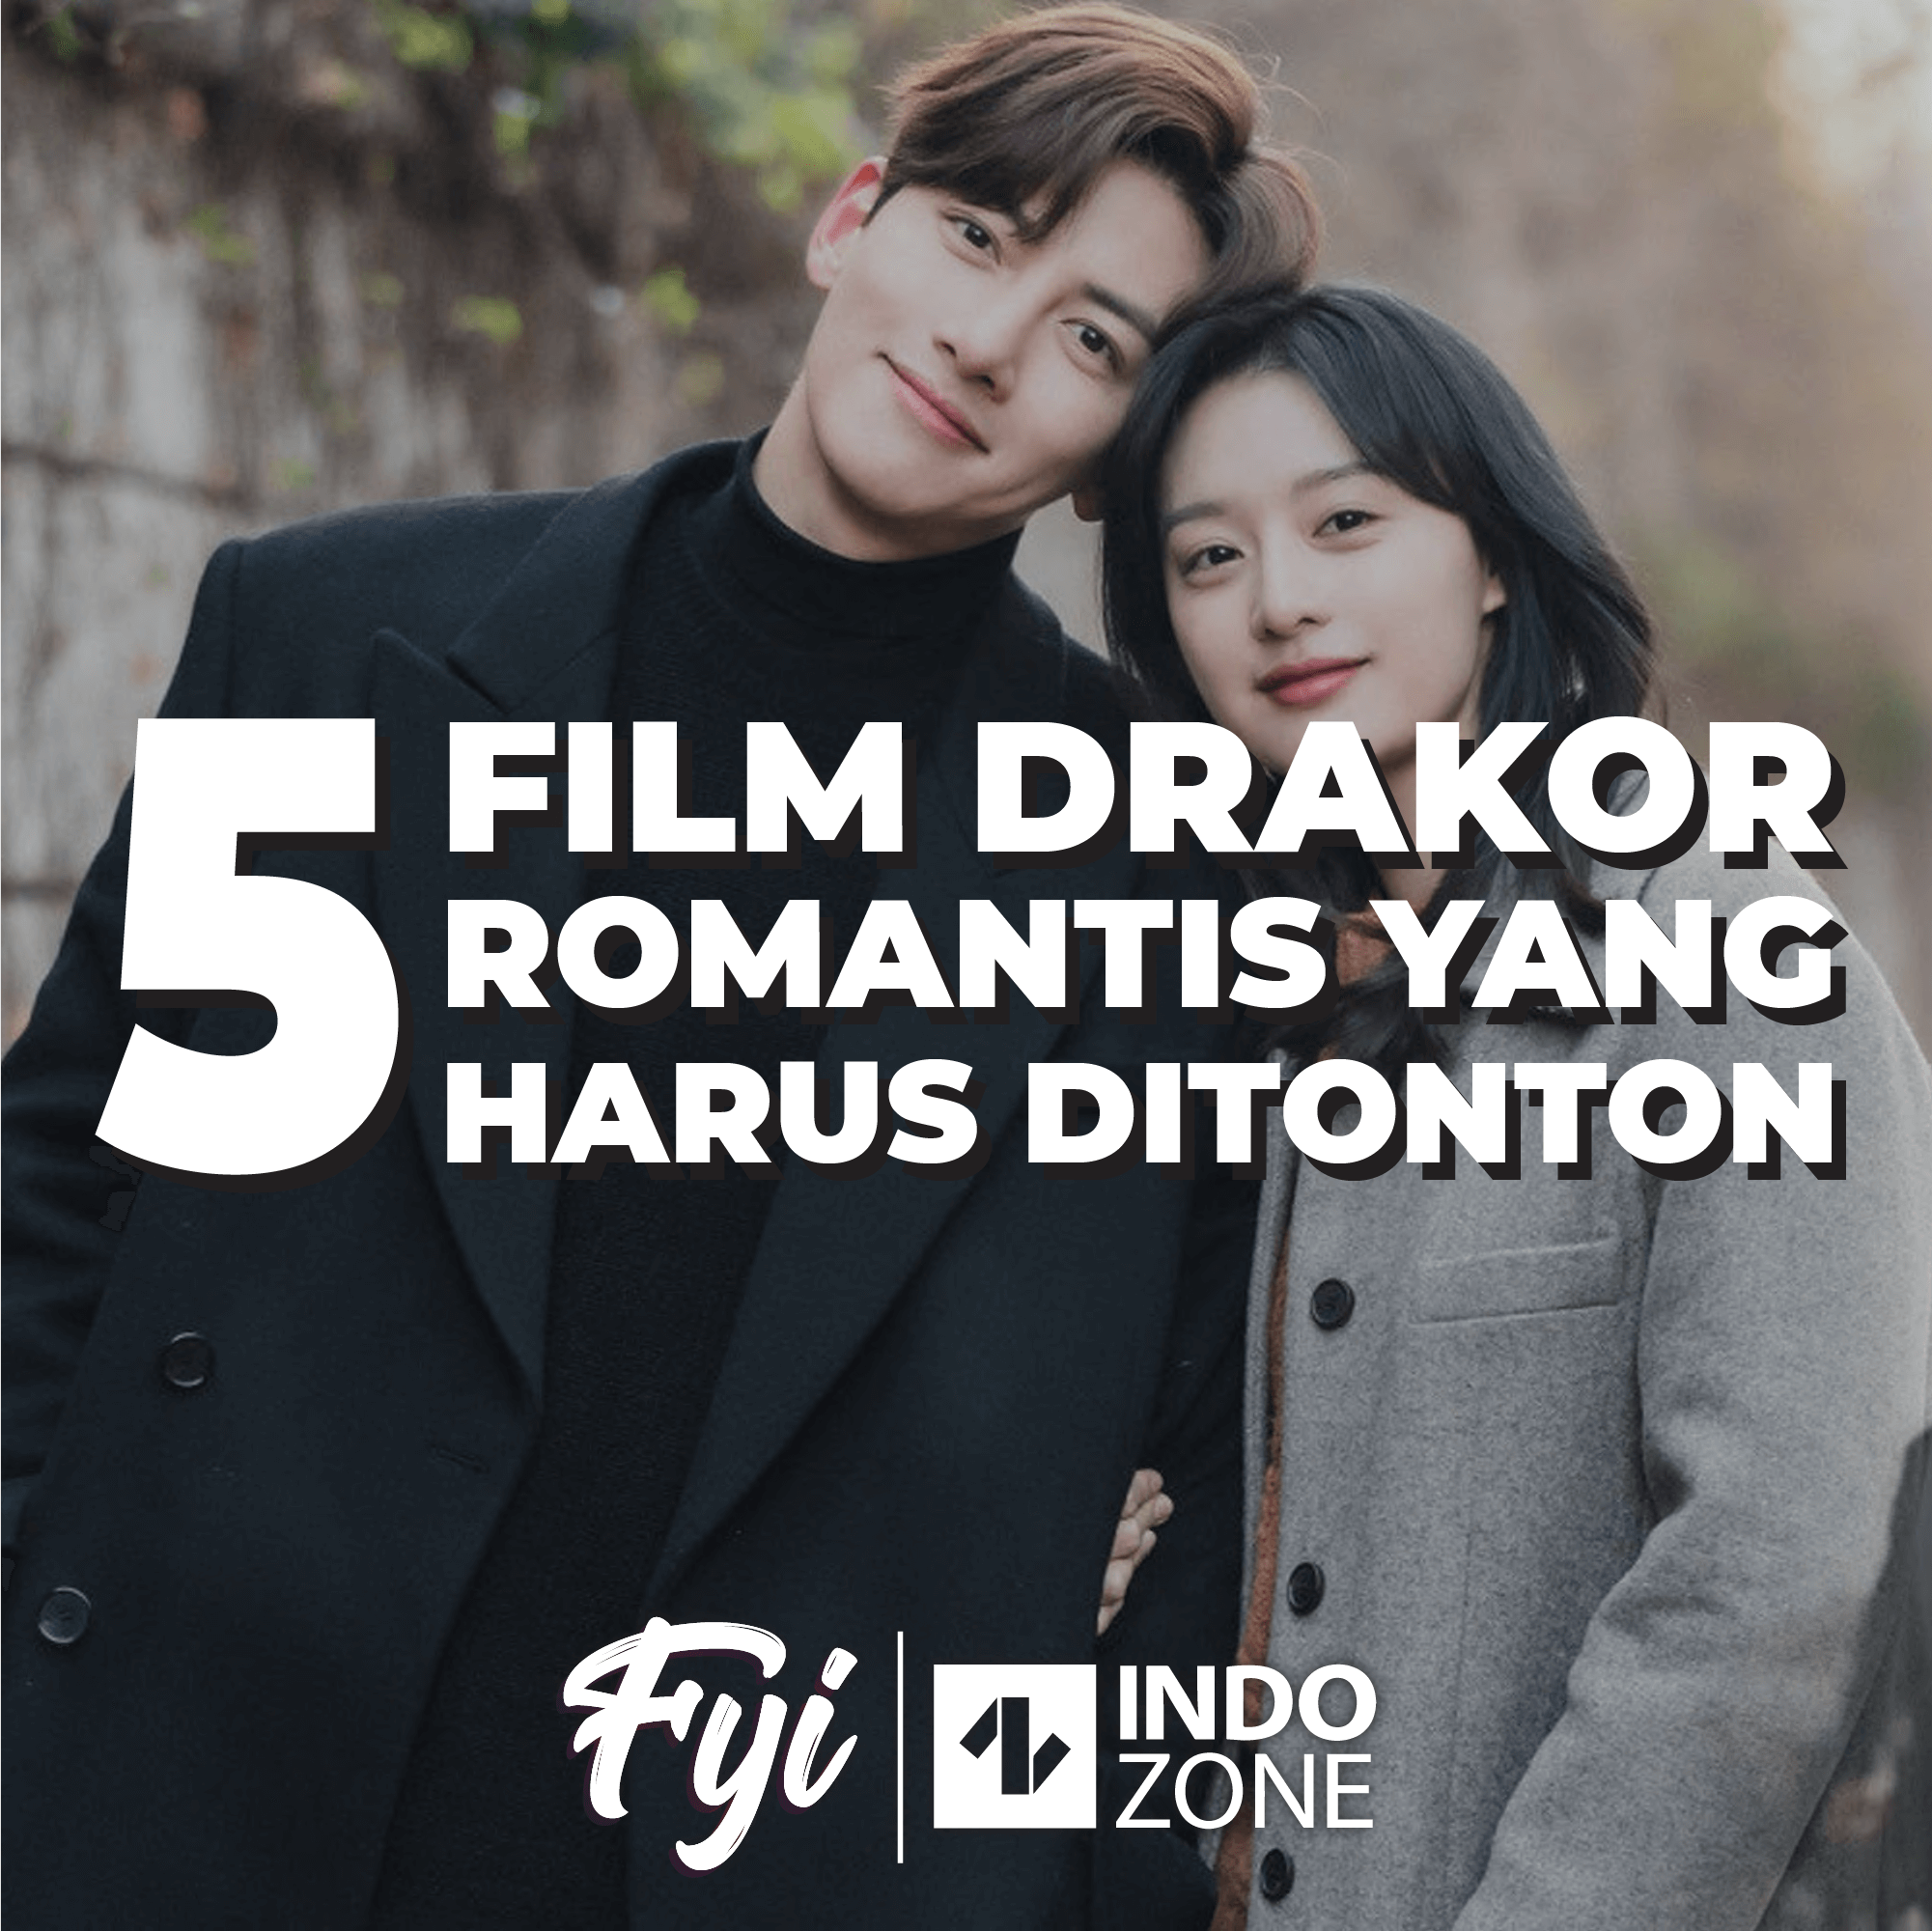 5 Film Drakor Romantis Yang Harus Ditonton | Indozone.id